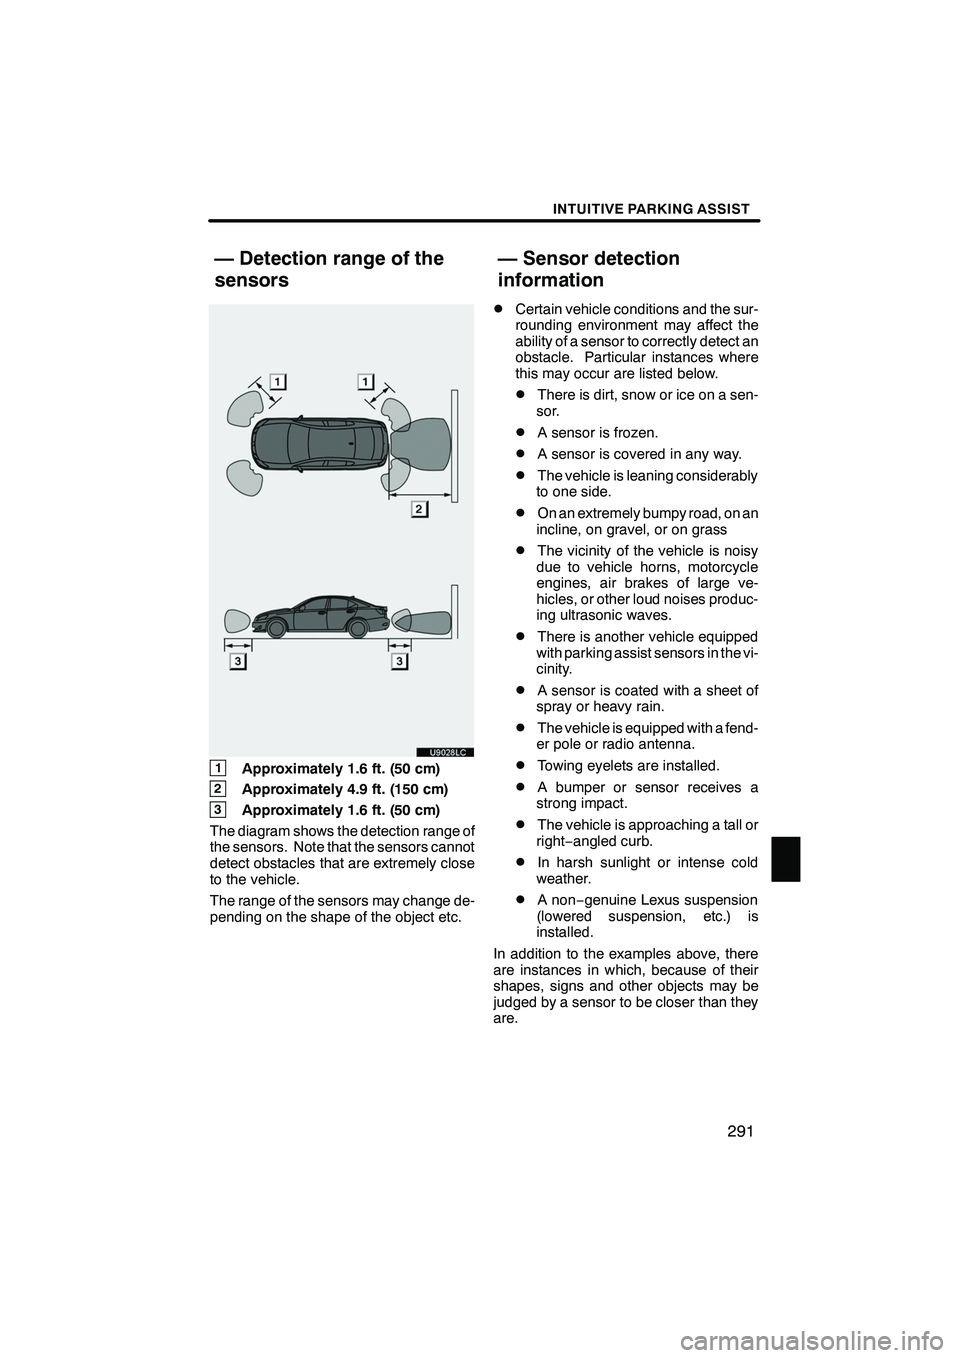 Lexus IS250 2010  Navigation Manual INTUITIVE PARKING ASSIST
291
1Approximately 1.6 ft. (50 cm)
2Approximately 4.9 ft. (150 cm)
3Approximately 1.6 ft. (50 cm)
The diagram shows the detection range of
the sensors. Note that the sensors c